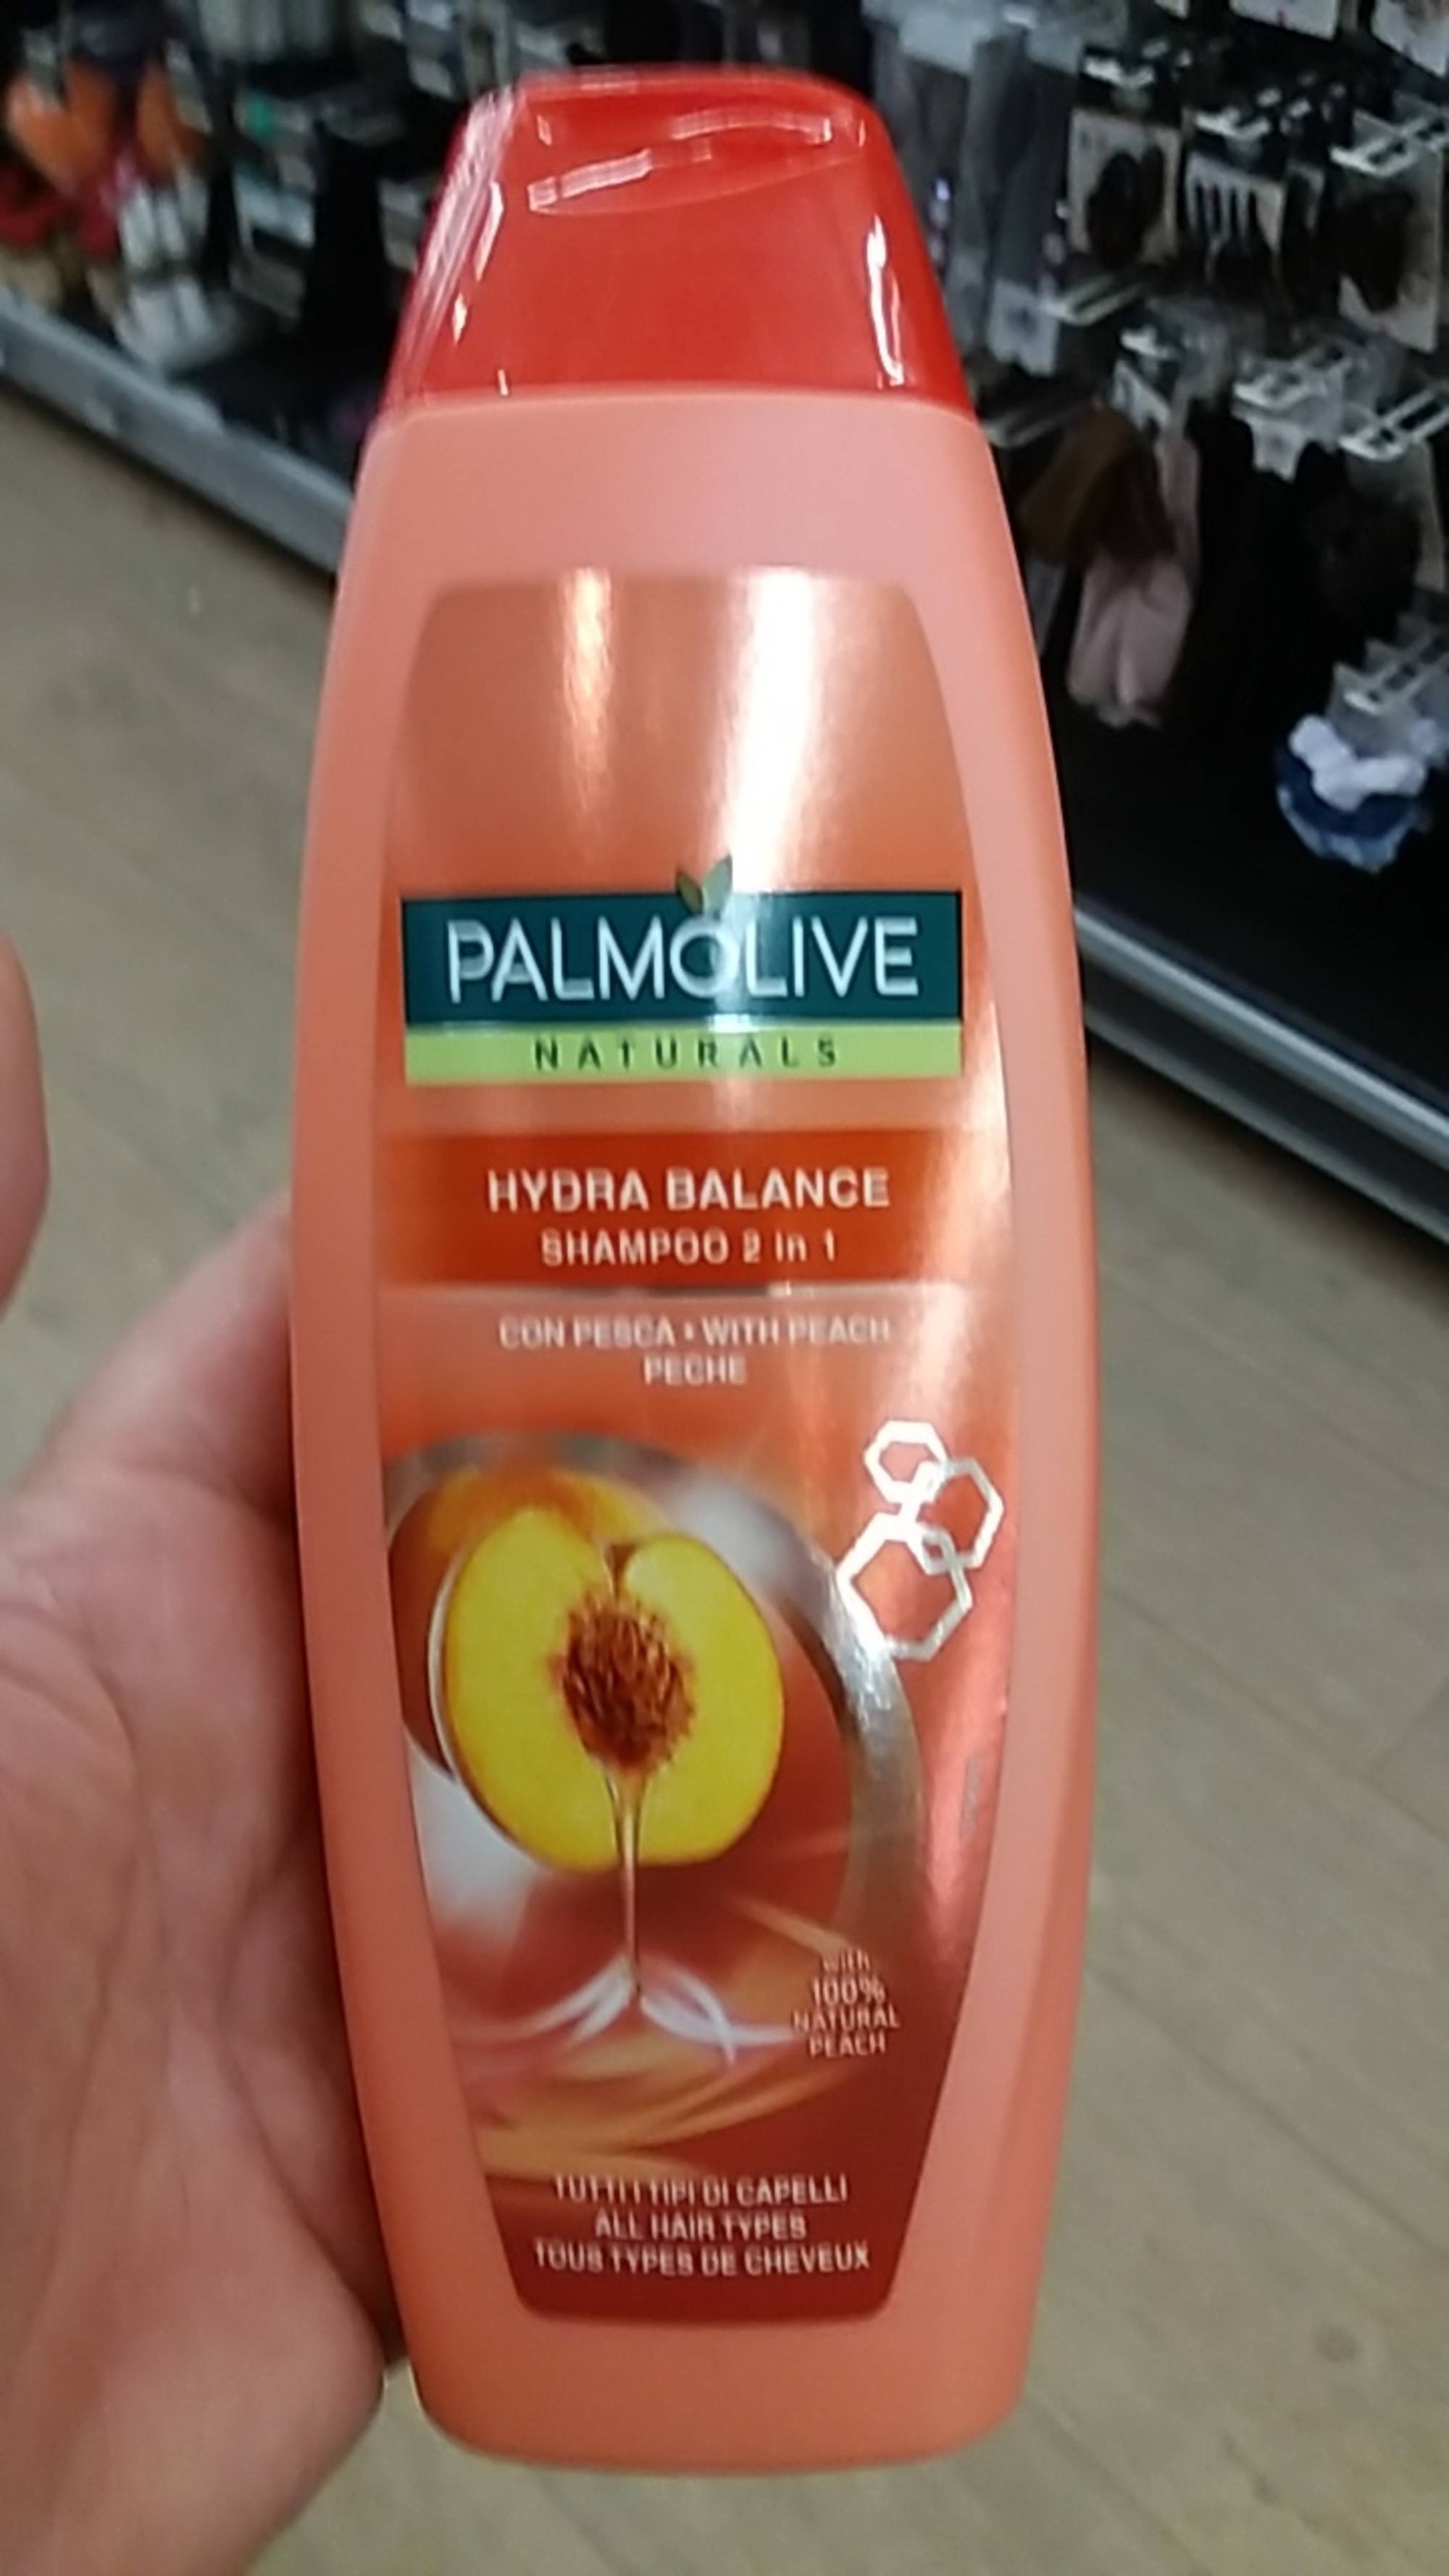 PALMOLIVE - Naturals Hydra balance shampooing 2 en 1